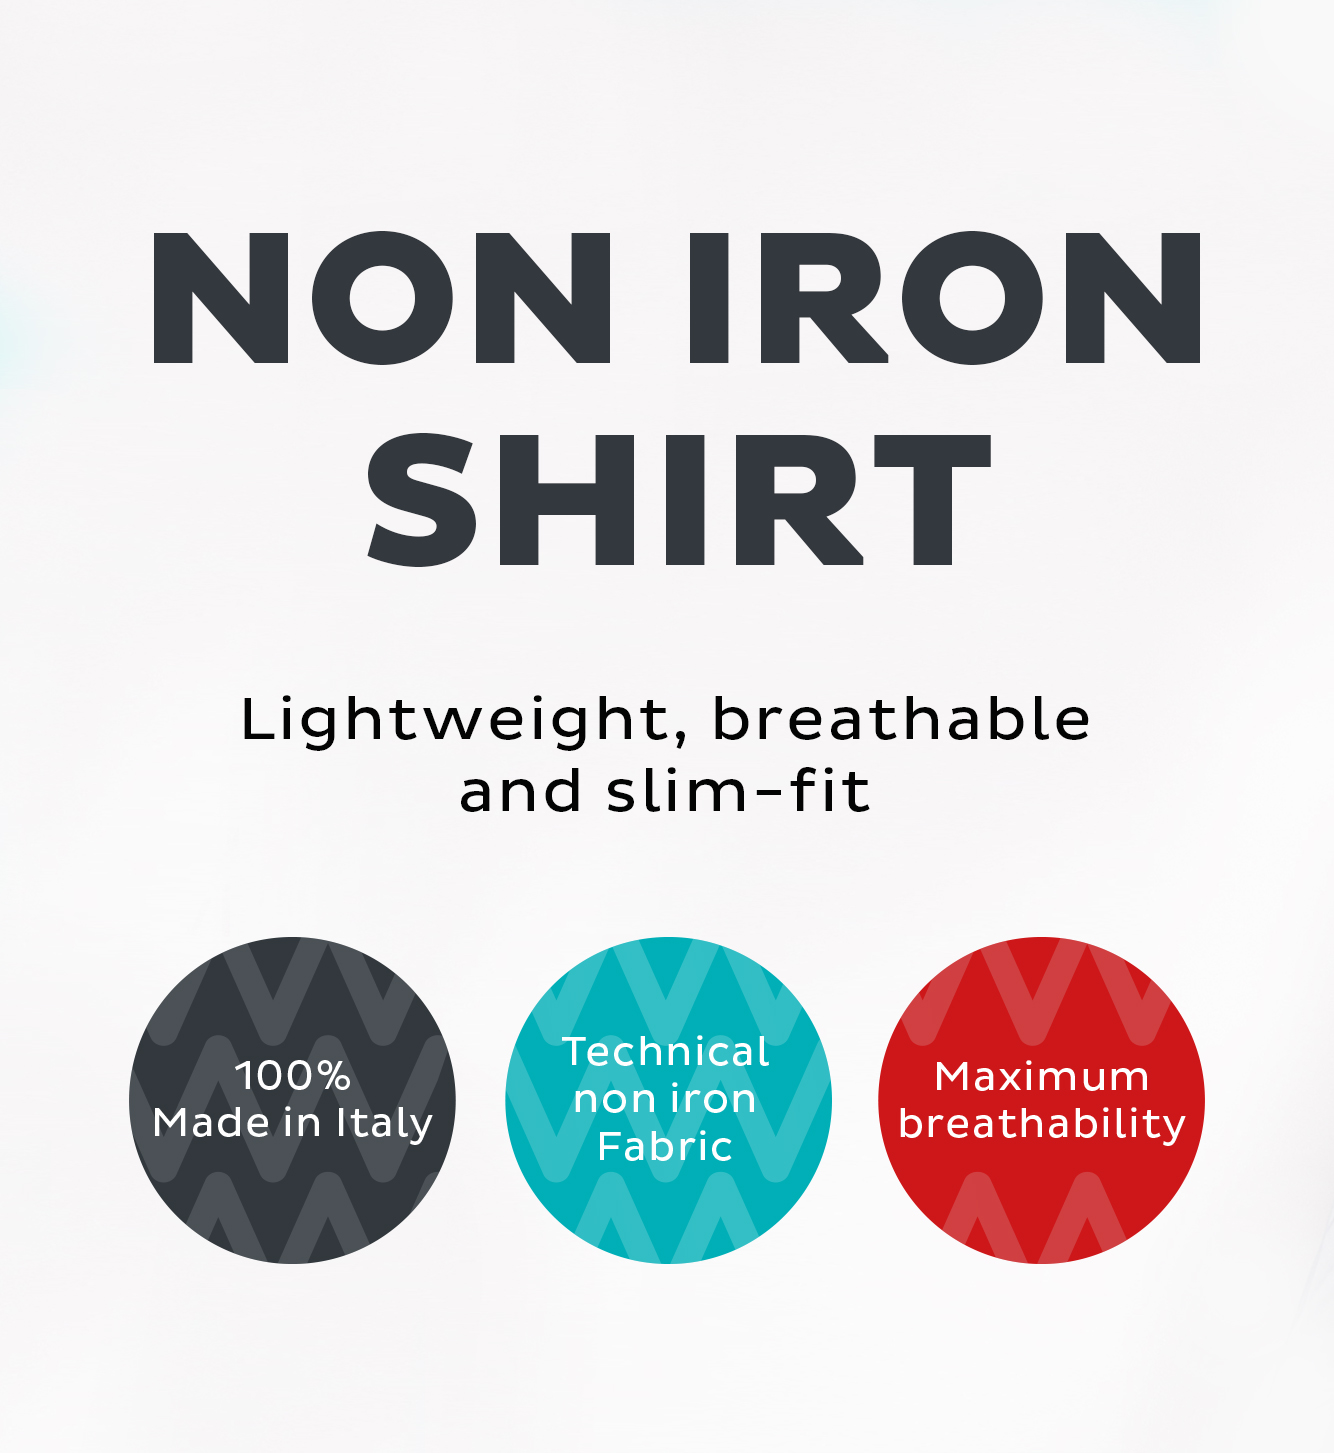 Non iron shirts for man, women and boys